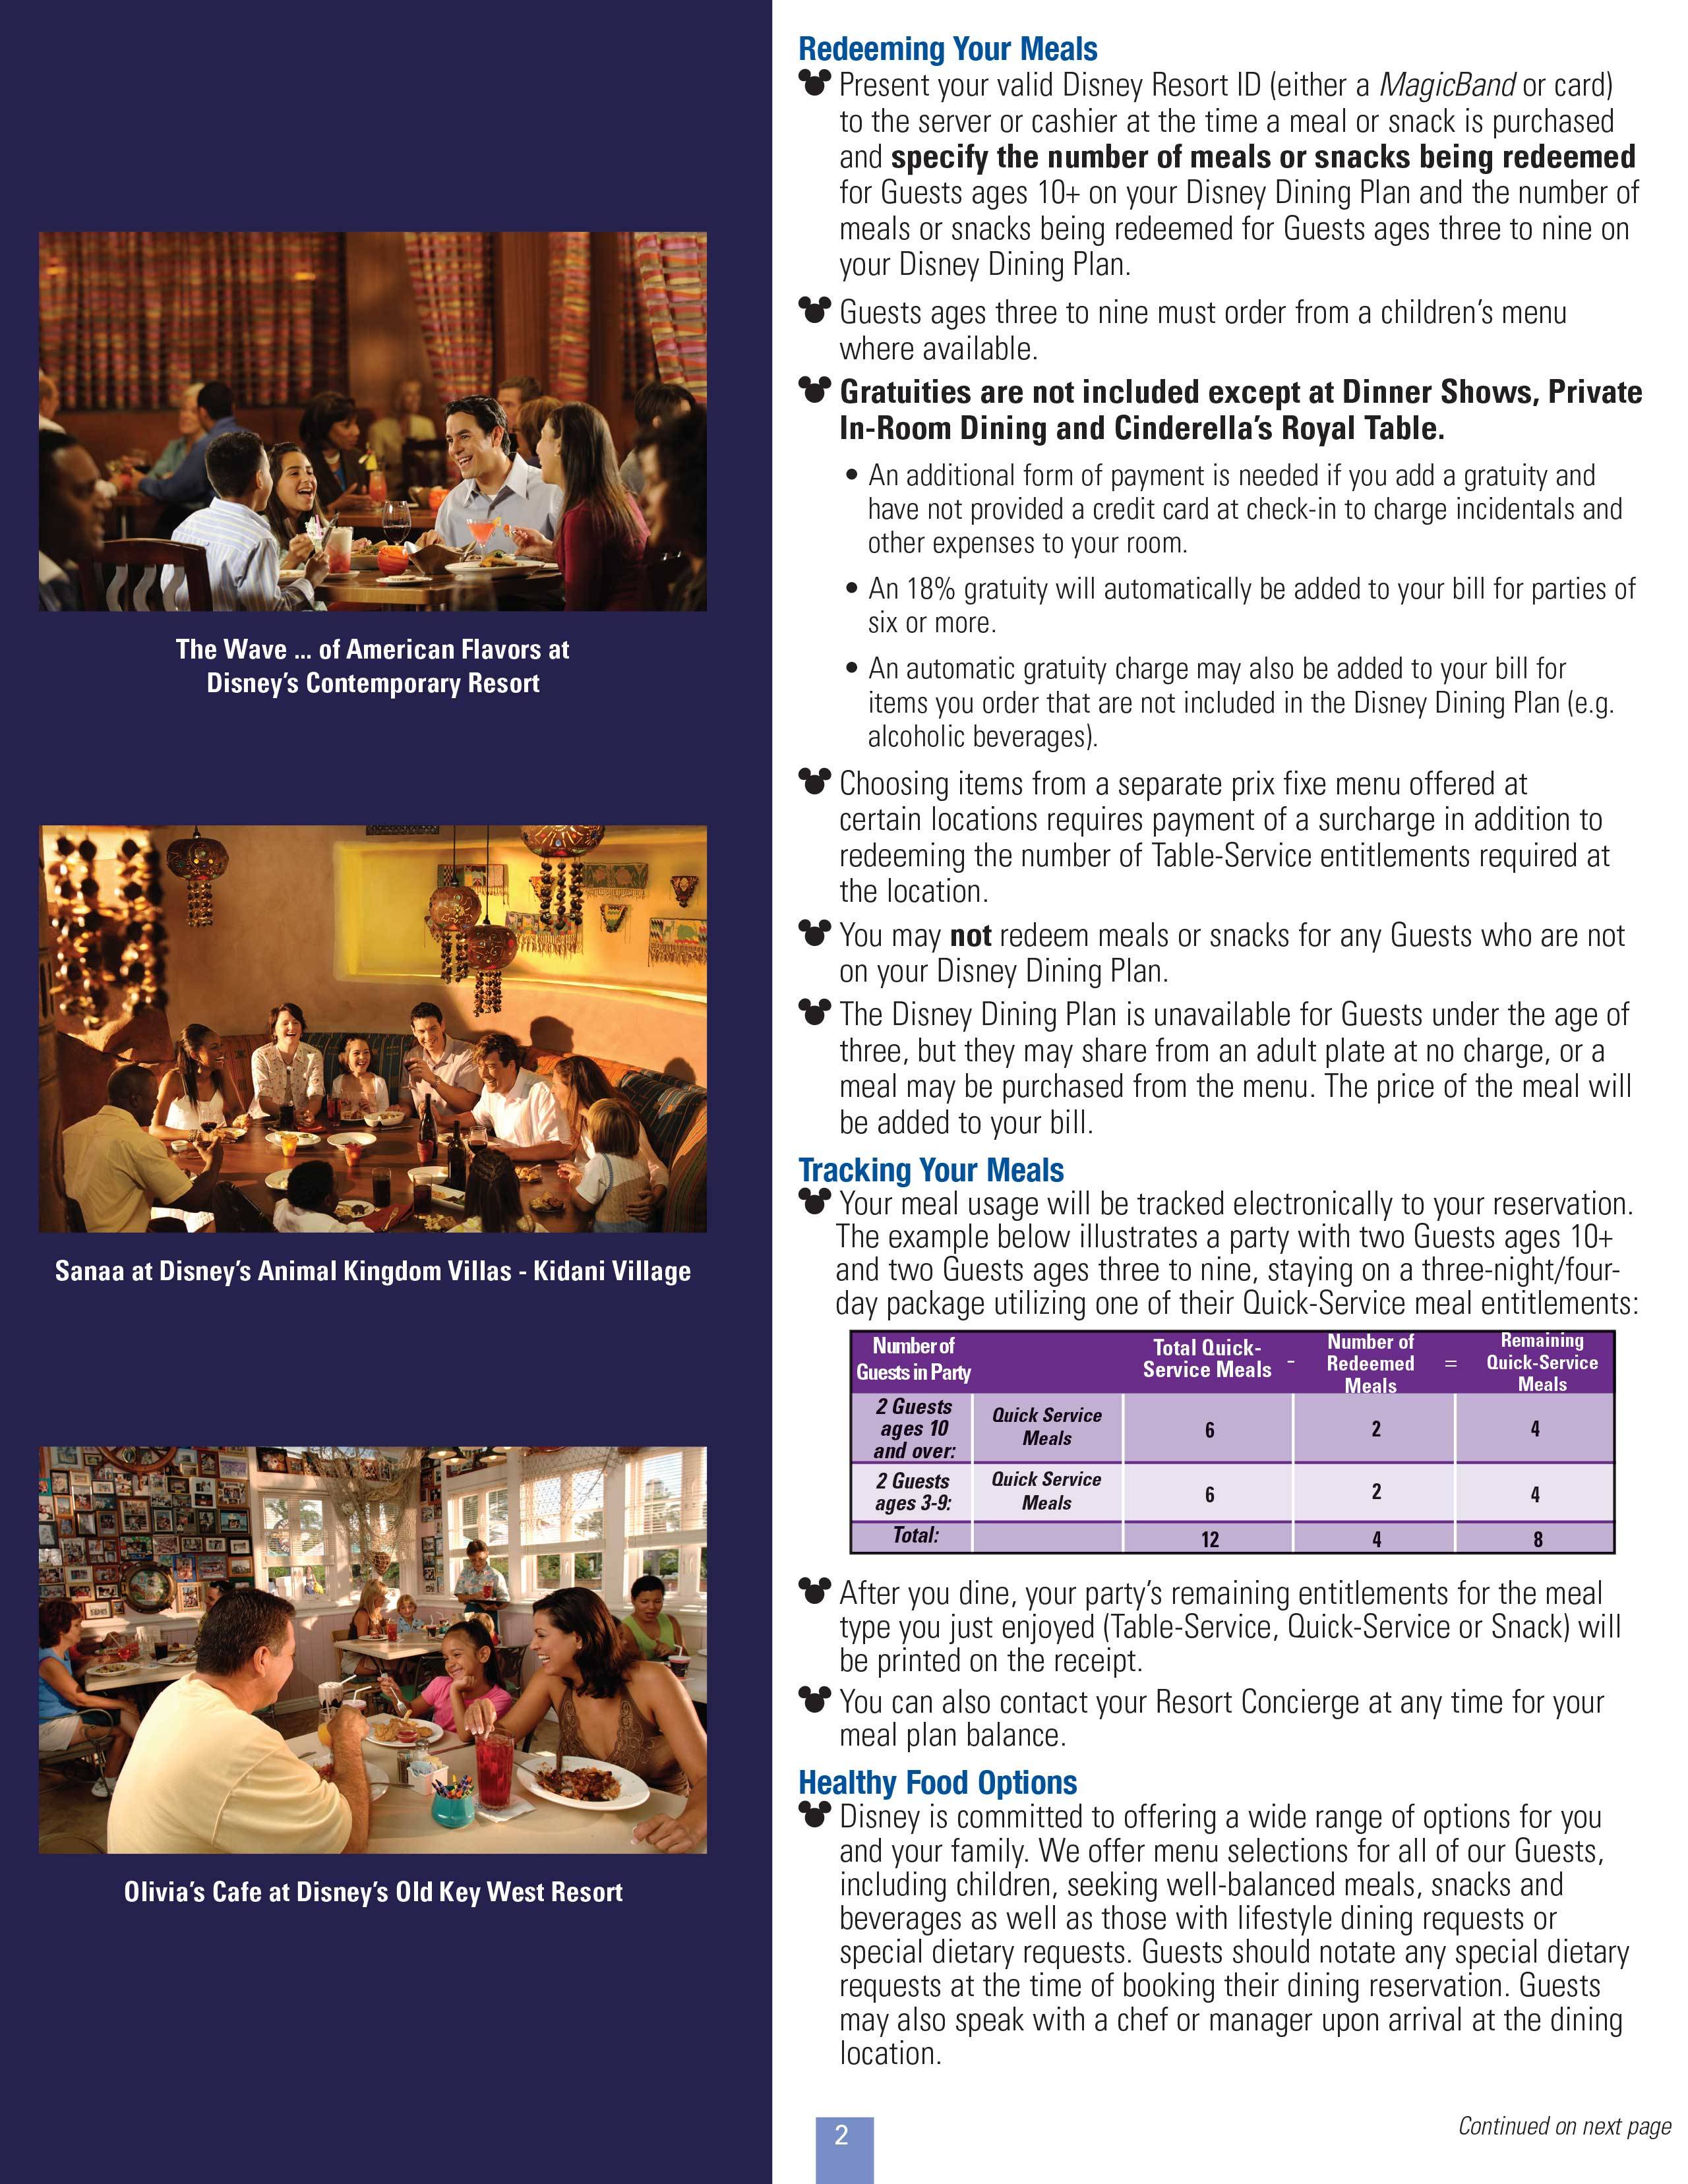 2015 Disney Dining Plan brochure - Page 2